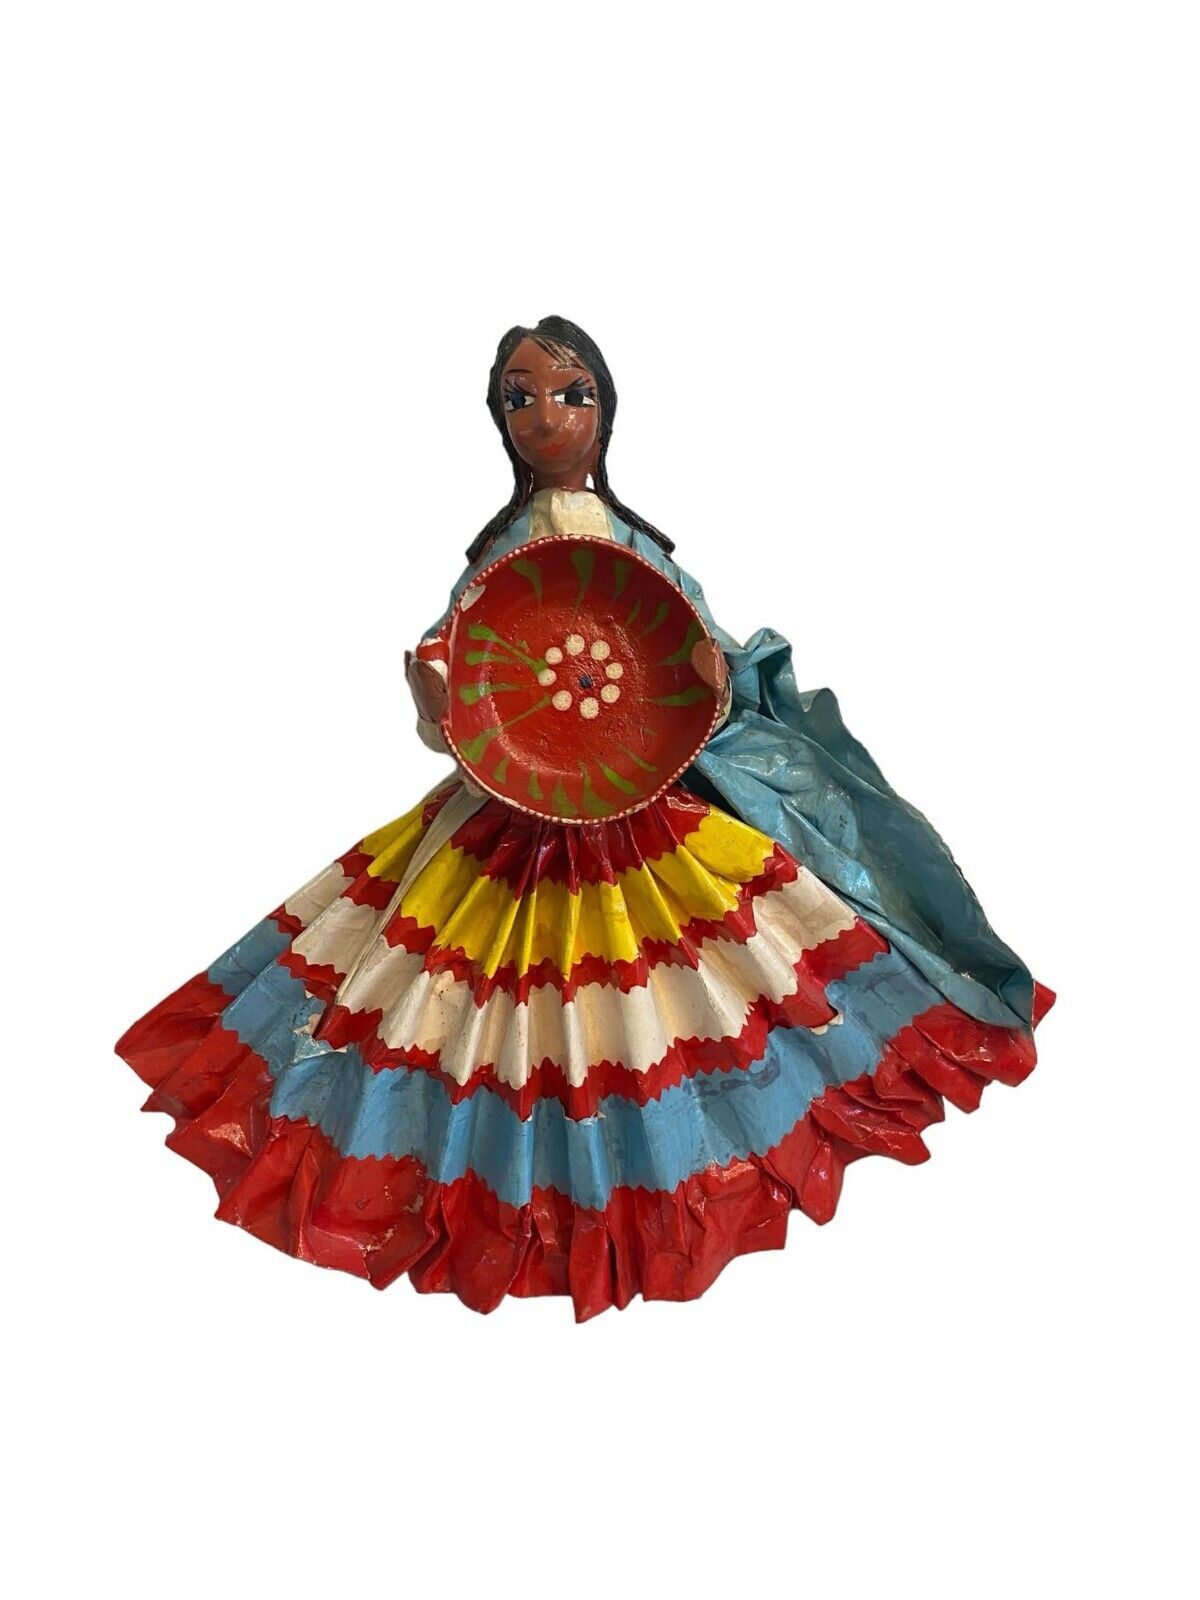 Folk Art Paper Mache Mexican Woman Figurine in Traditional Dress, Vintage